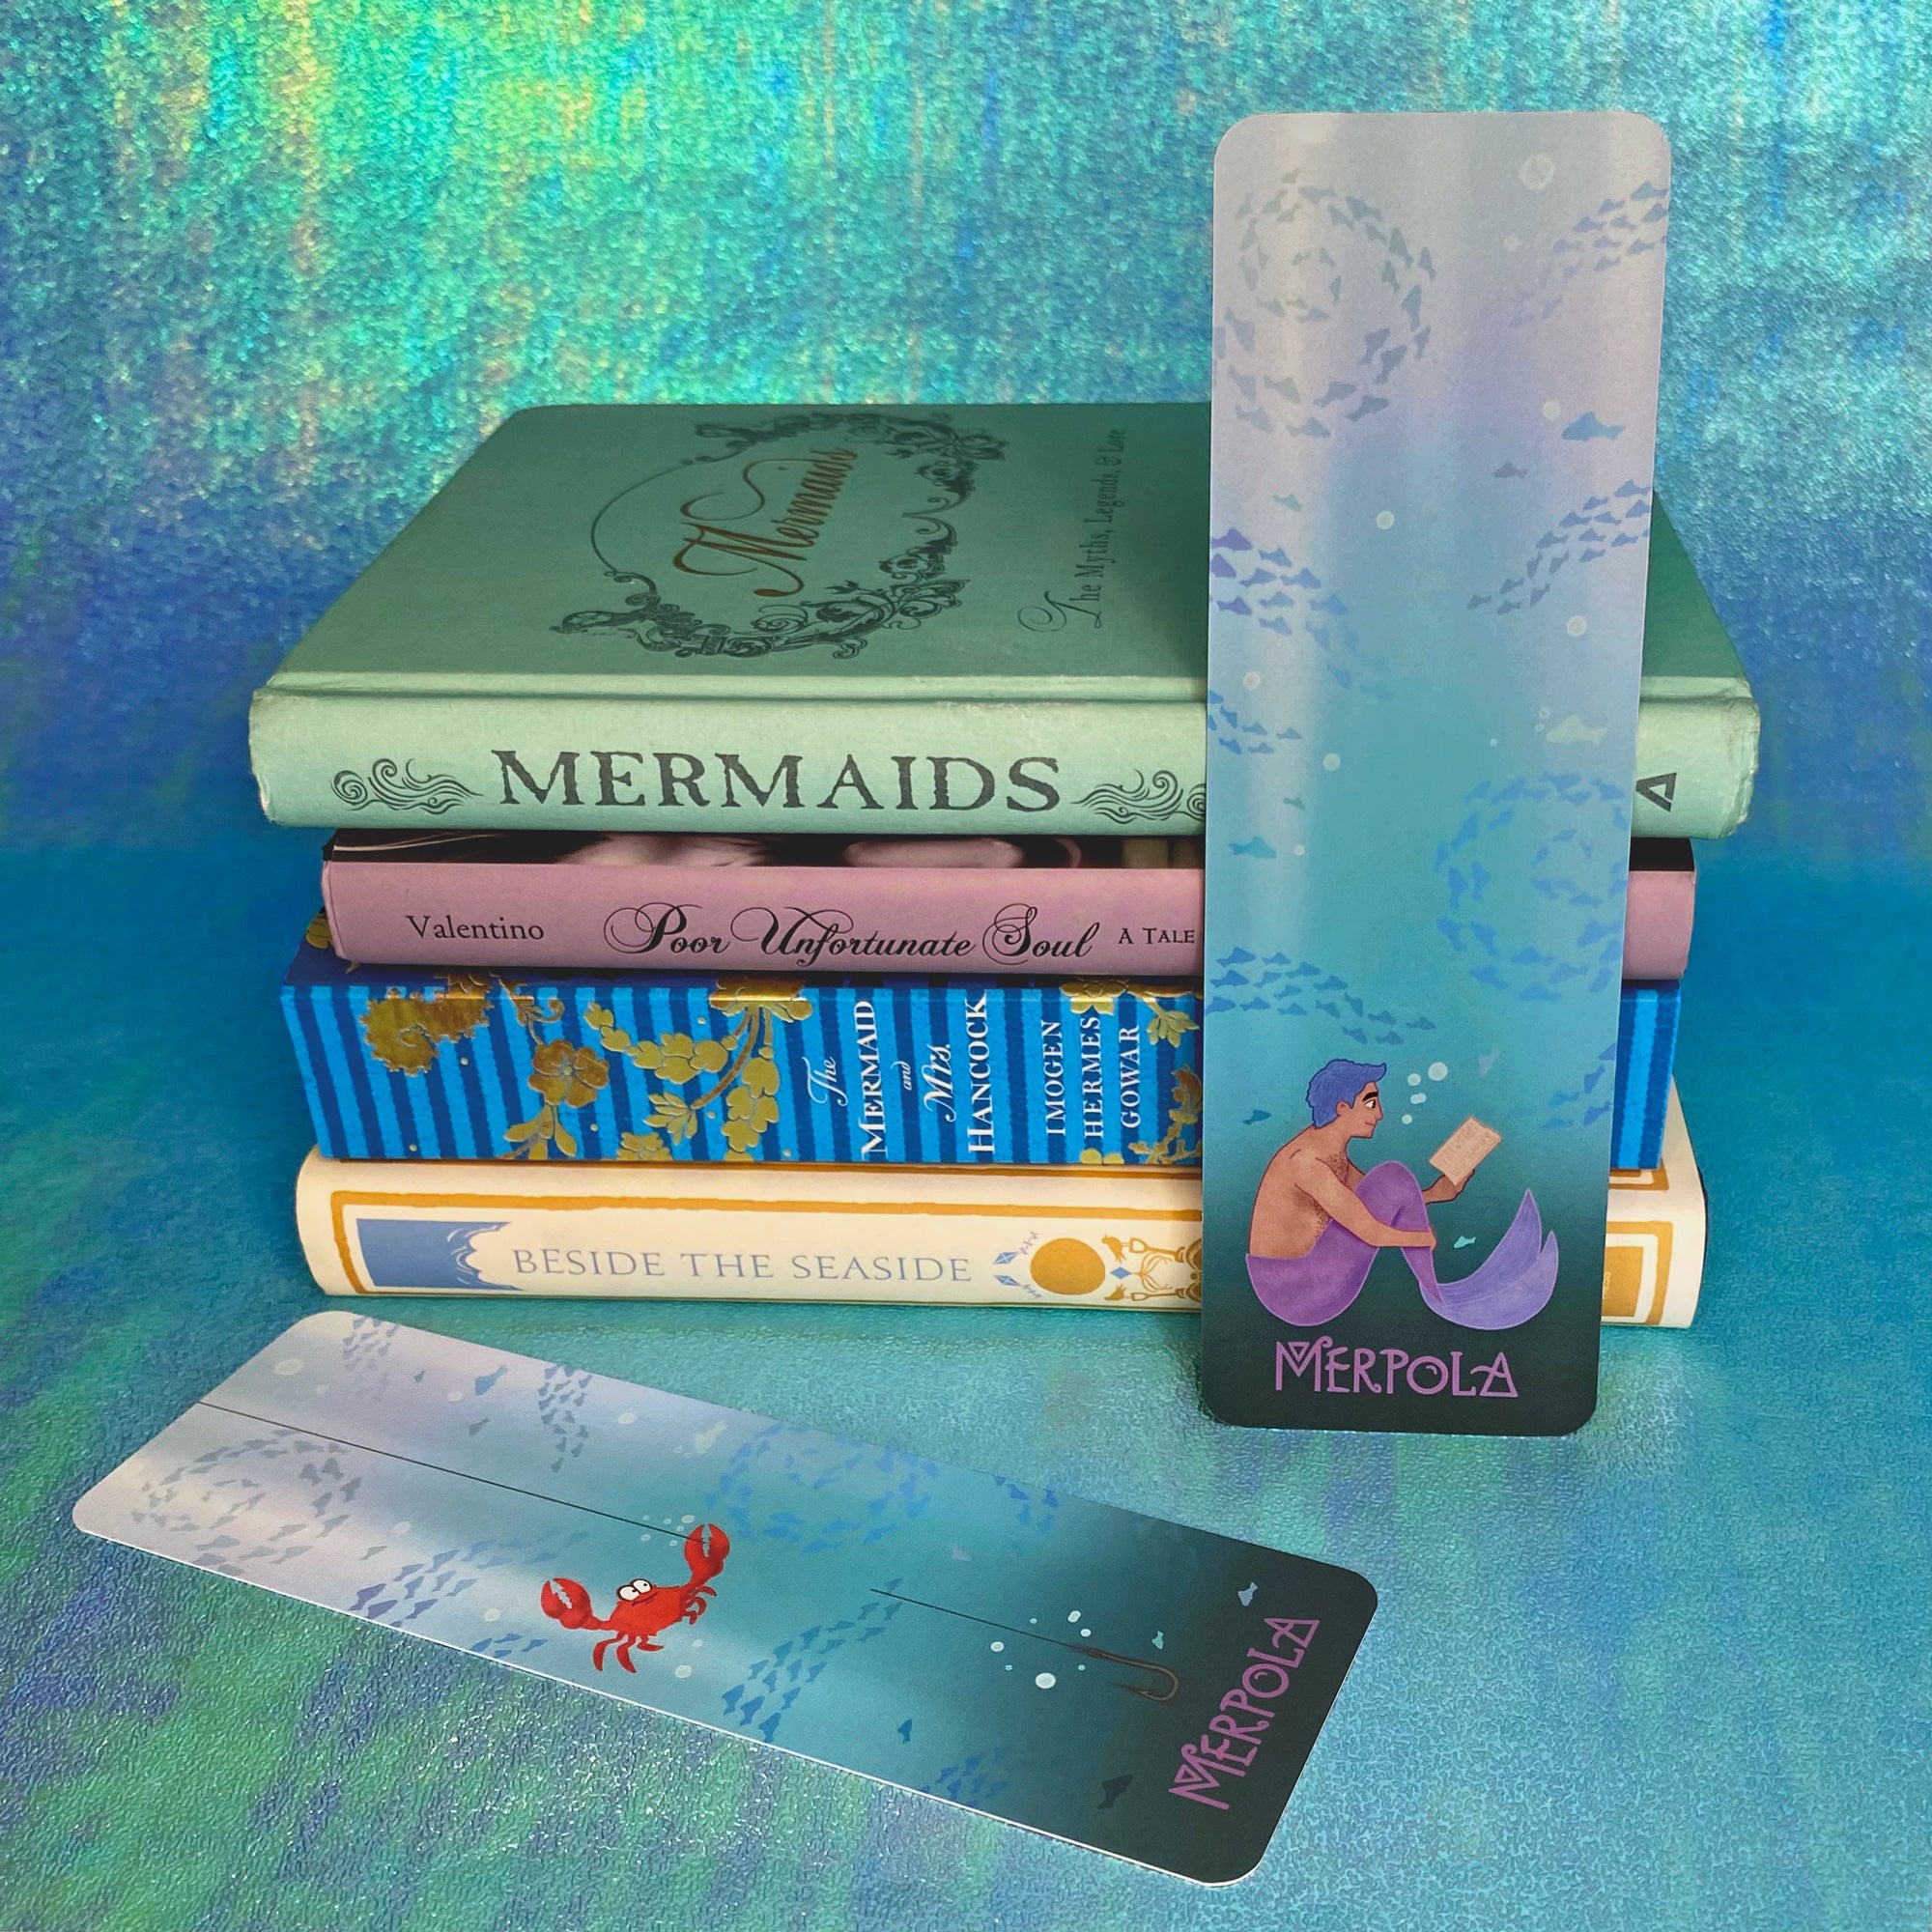 Deep Sea Bookmark - Double Sided - Merpola